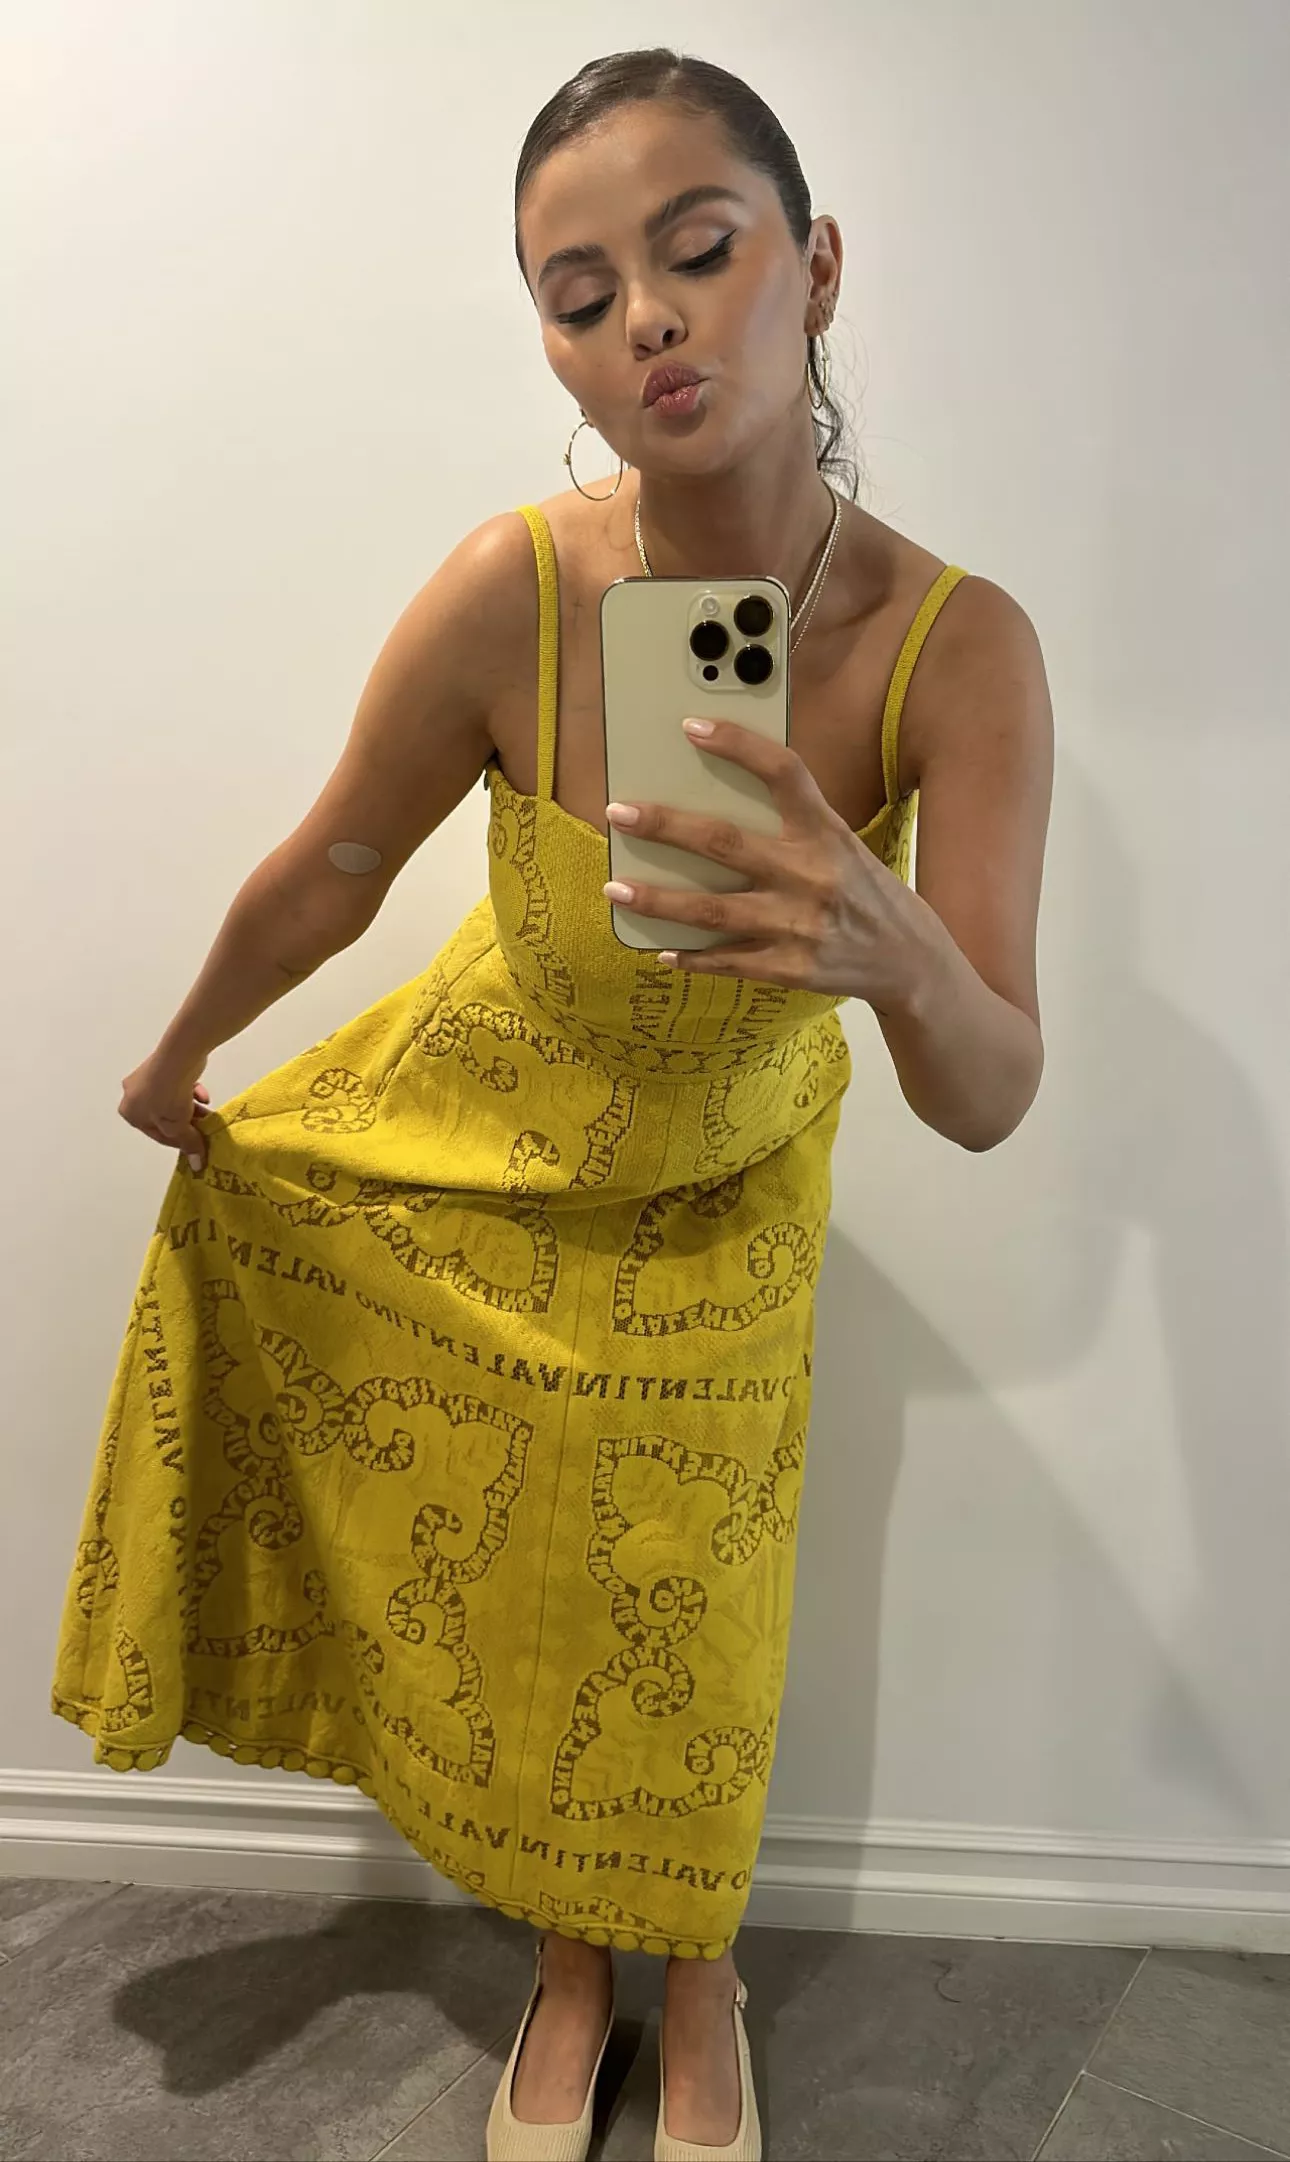 Selena Gomez Wears Chic Yellow Dress and Citrus-Style Handbag to Beauty Launch instagram 08 15 23